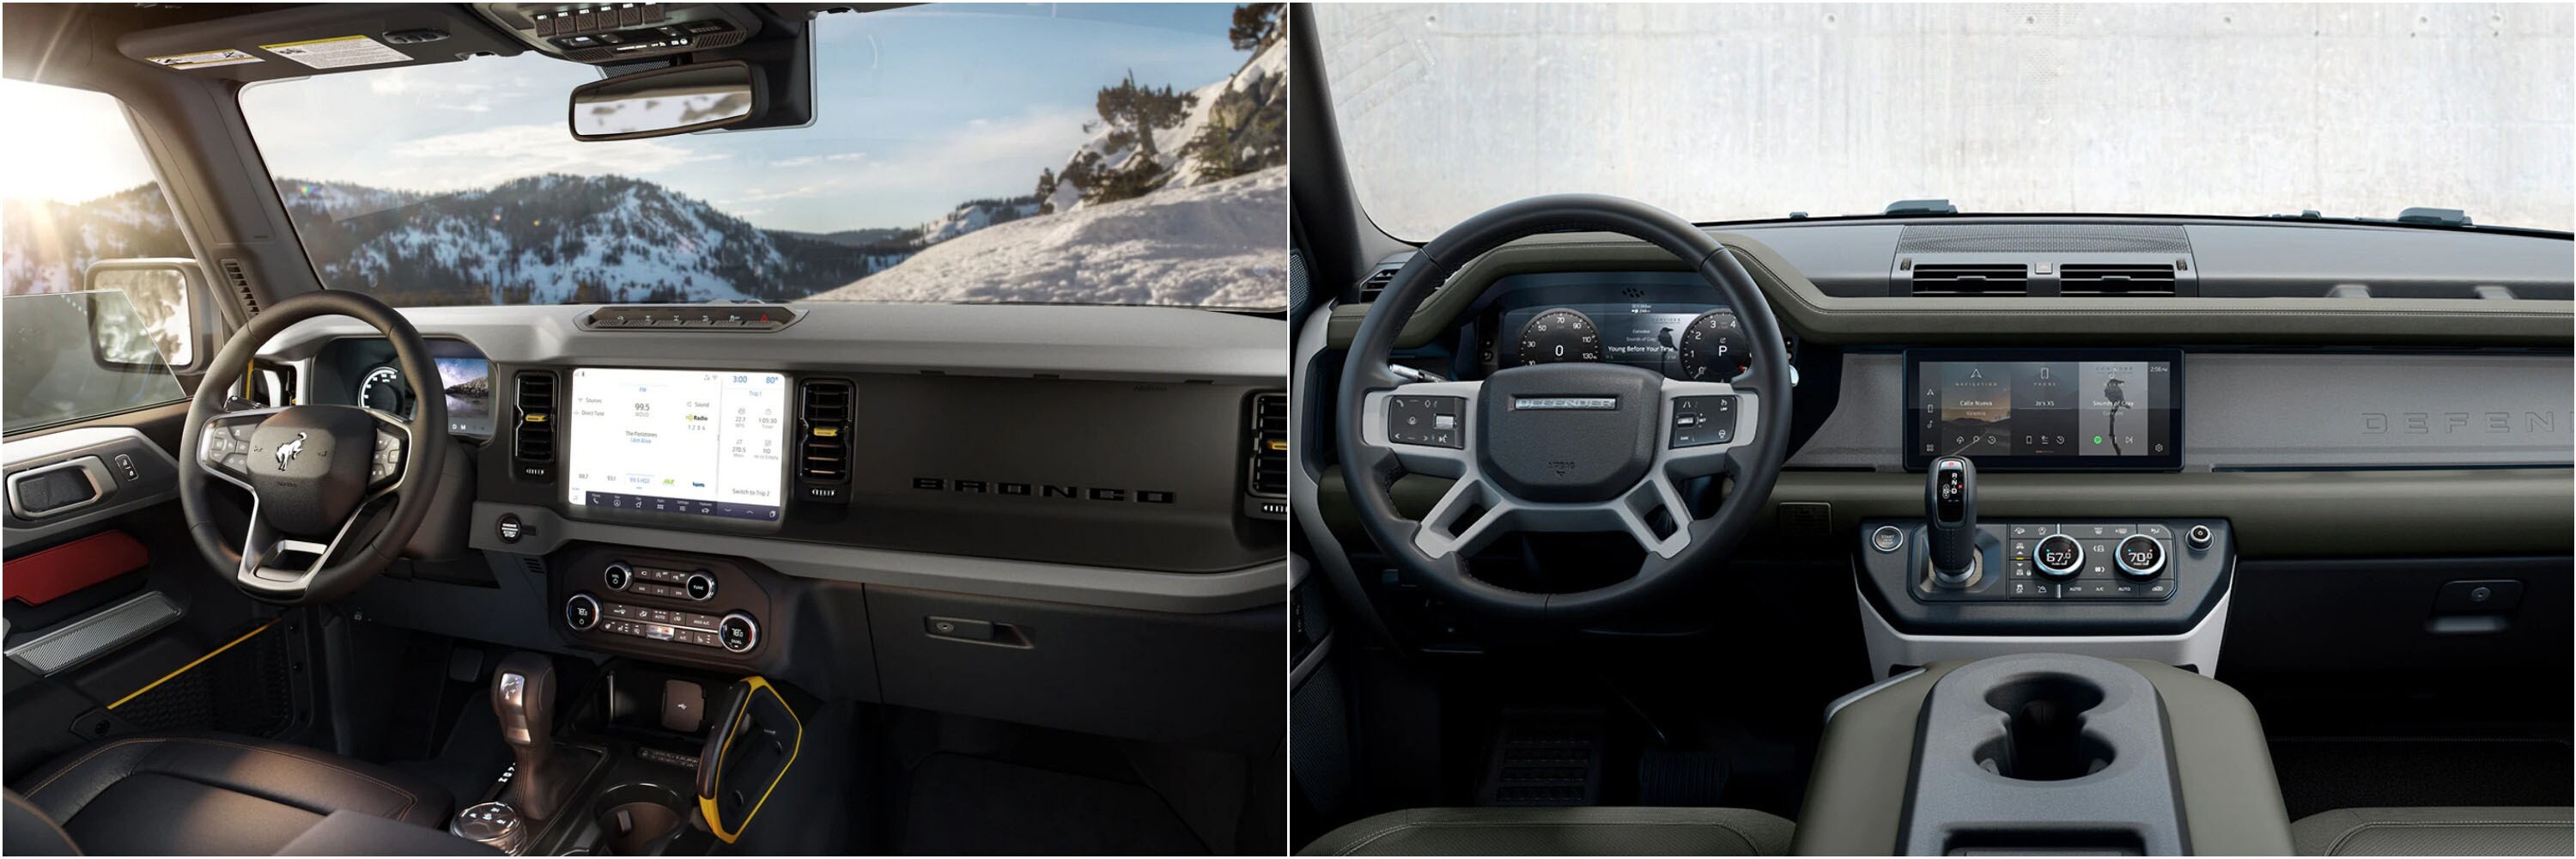 2021 Ford Bronco Vs. 2021 Land Rover Defender Interior Dashboard